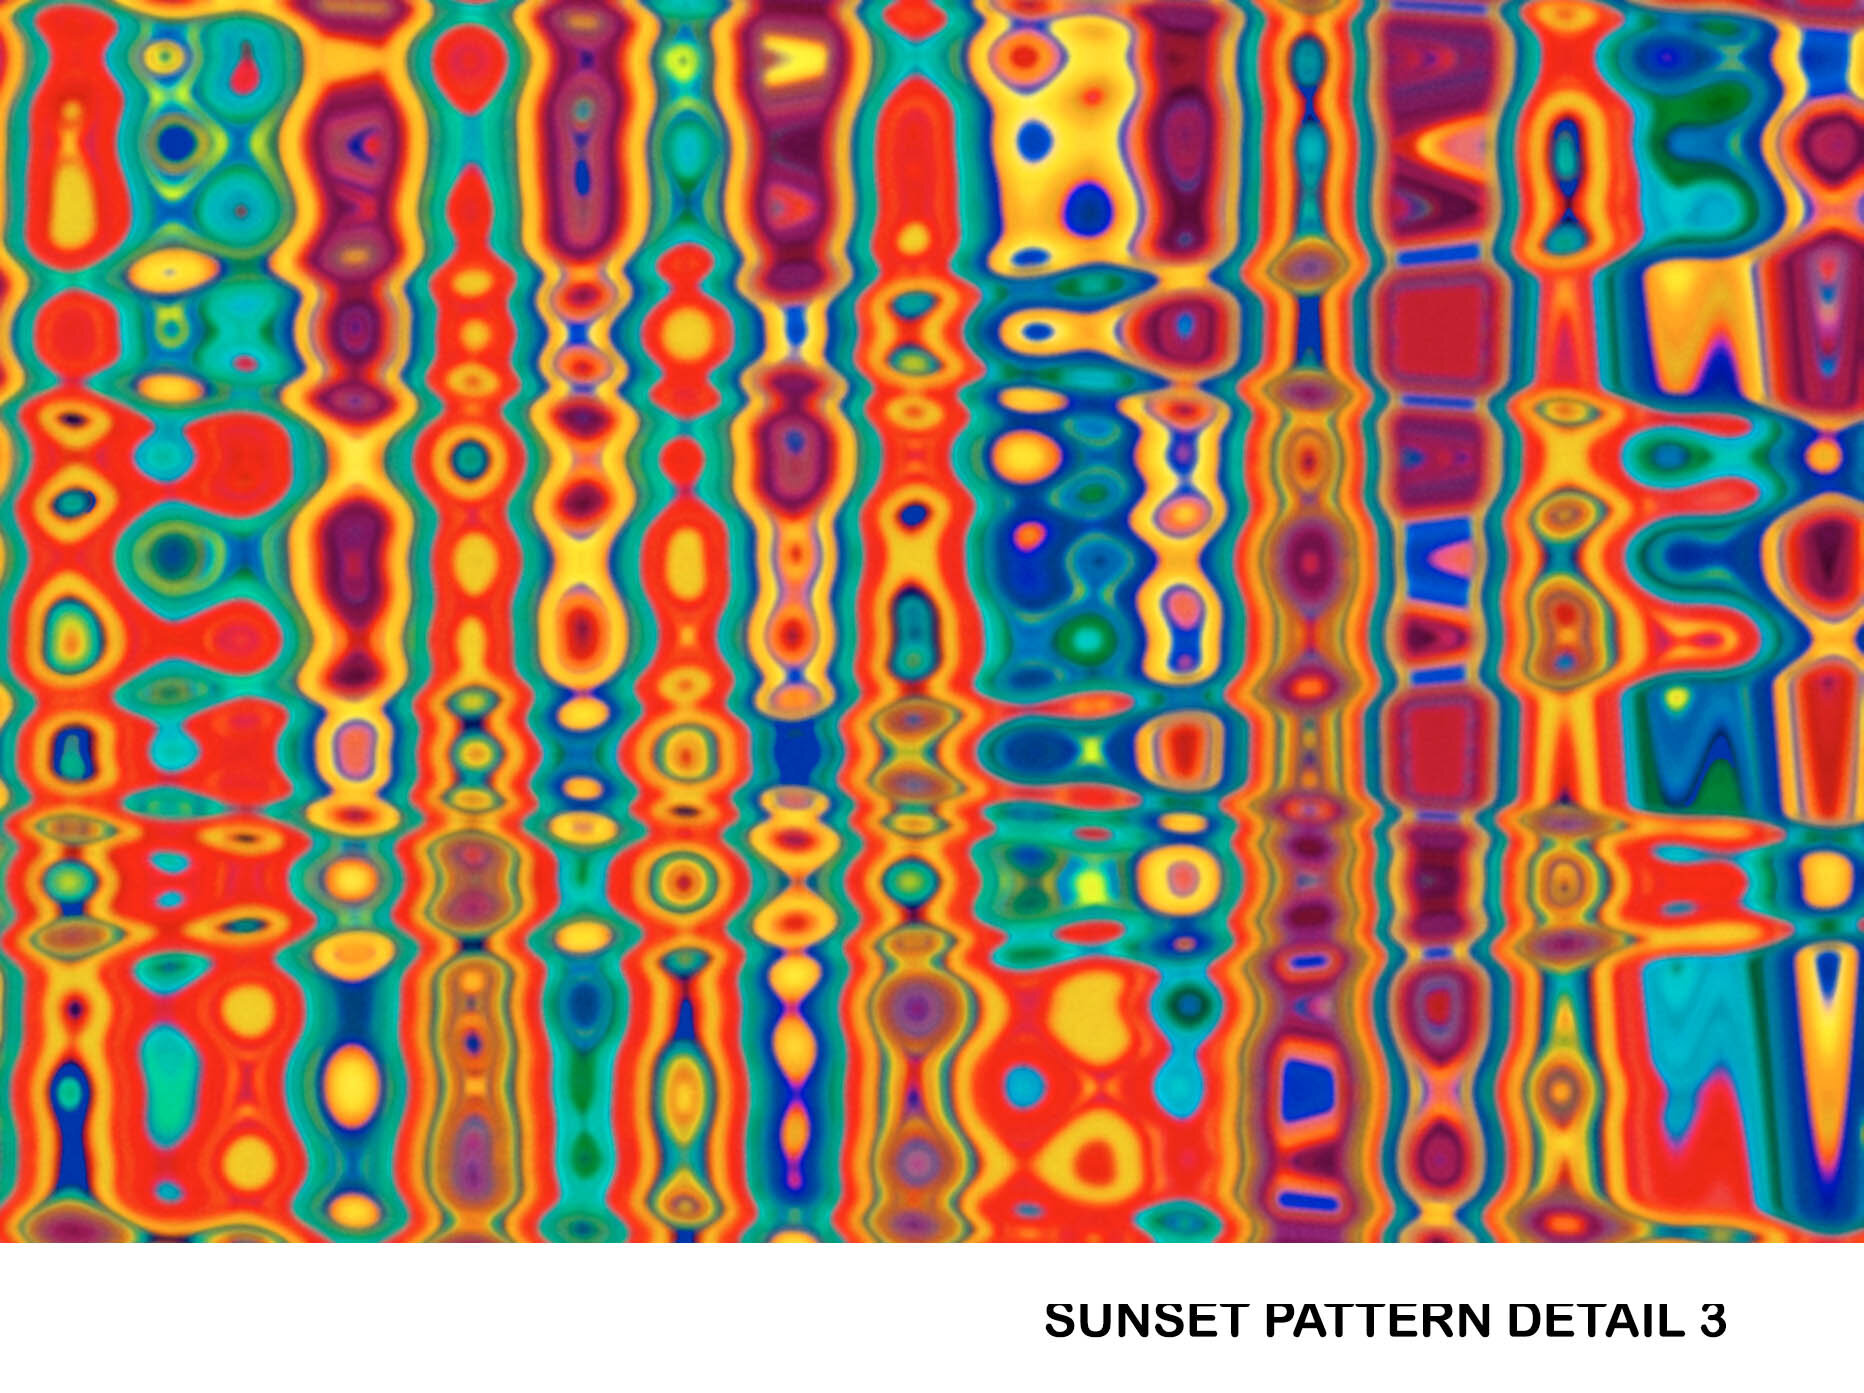 Sunset pattern detail 3 Titled.jpg